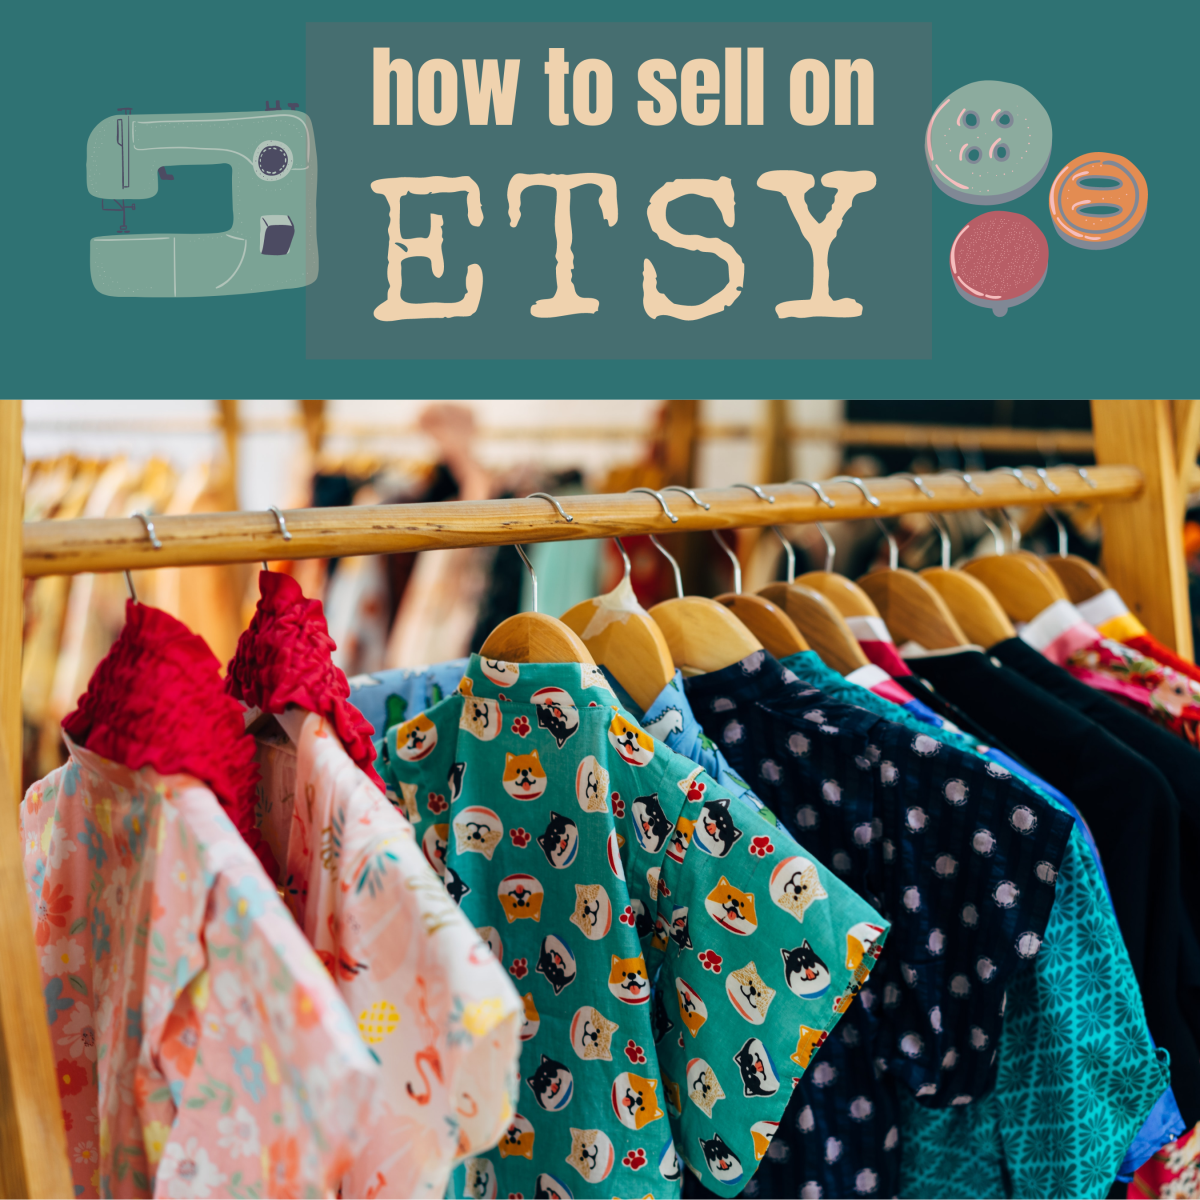 10 Tips for Selling on Etsy: Avoid Common Seller Mistakes